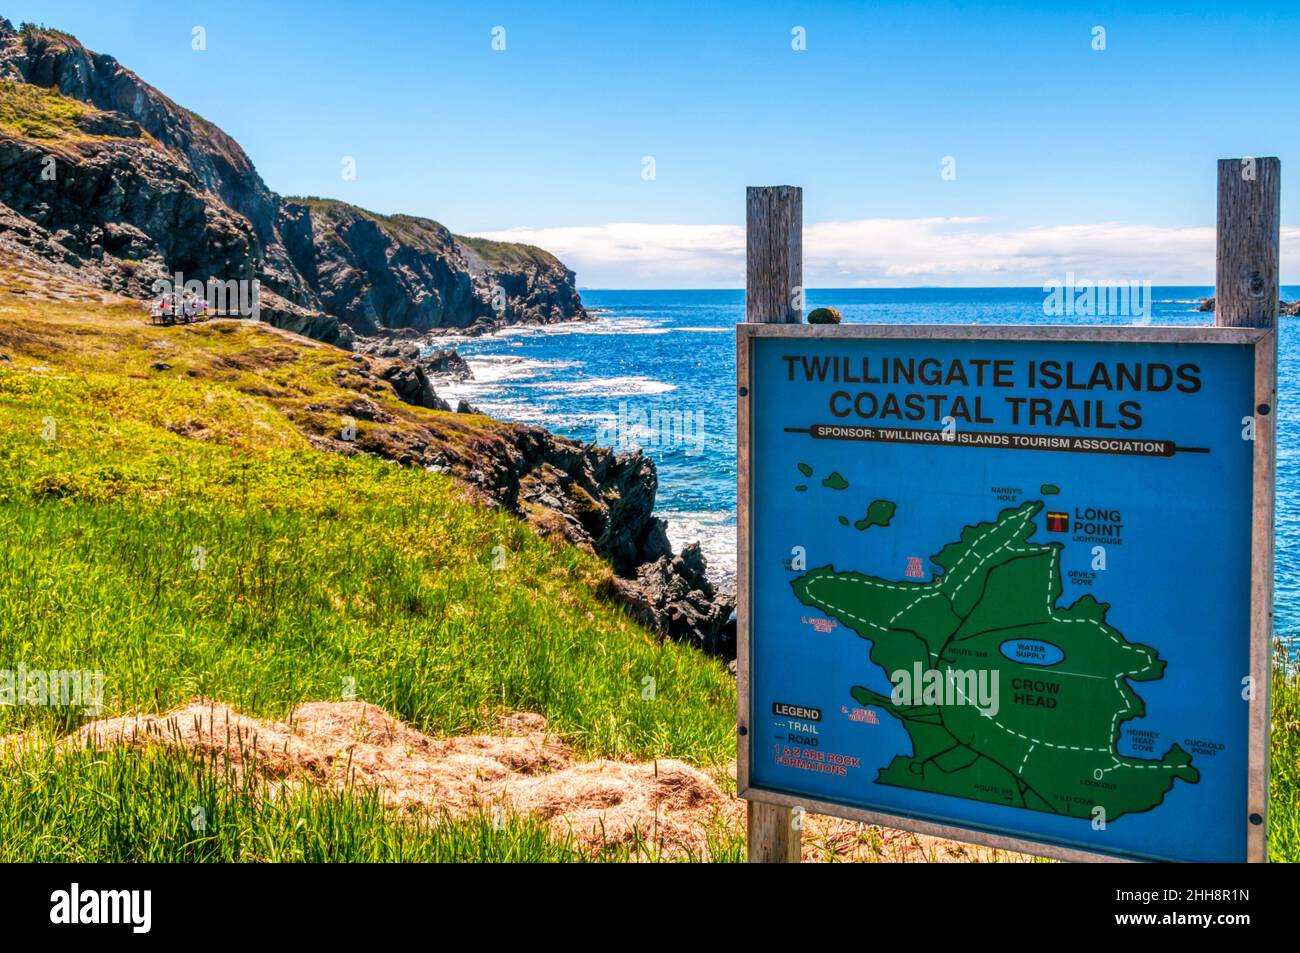 Sign for Twillingate Islands Coastal Trails, Newfoundland. Stock Photo